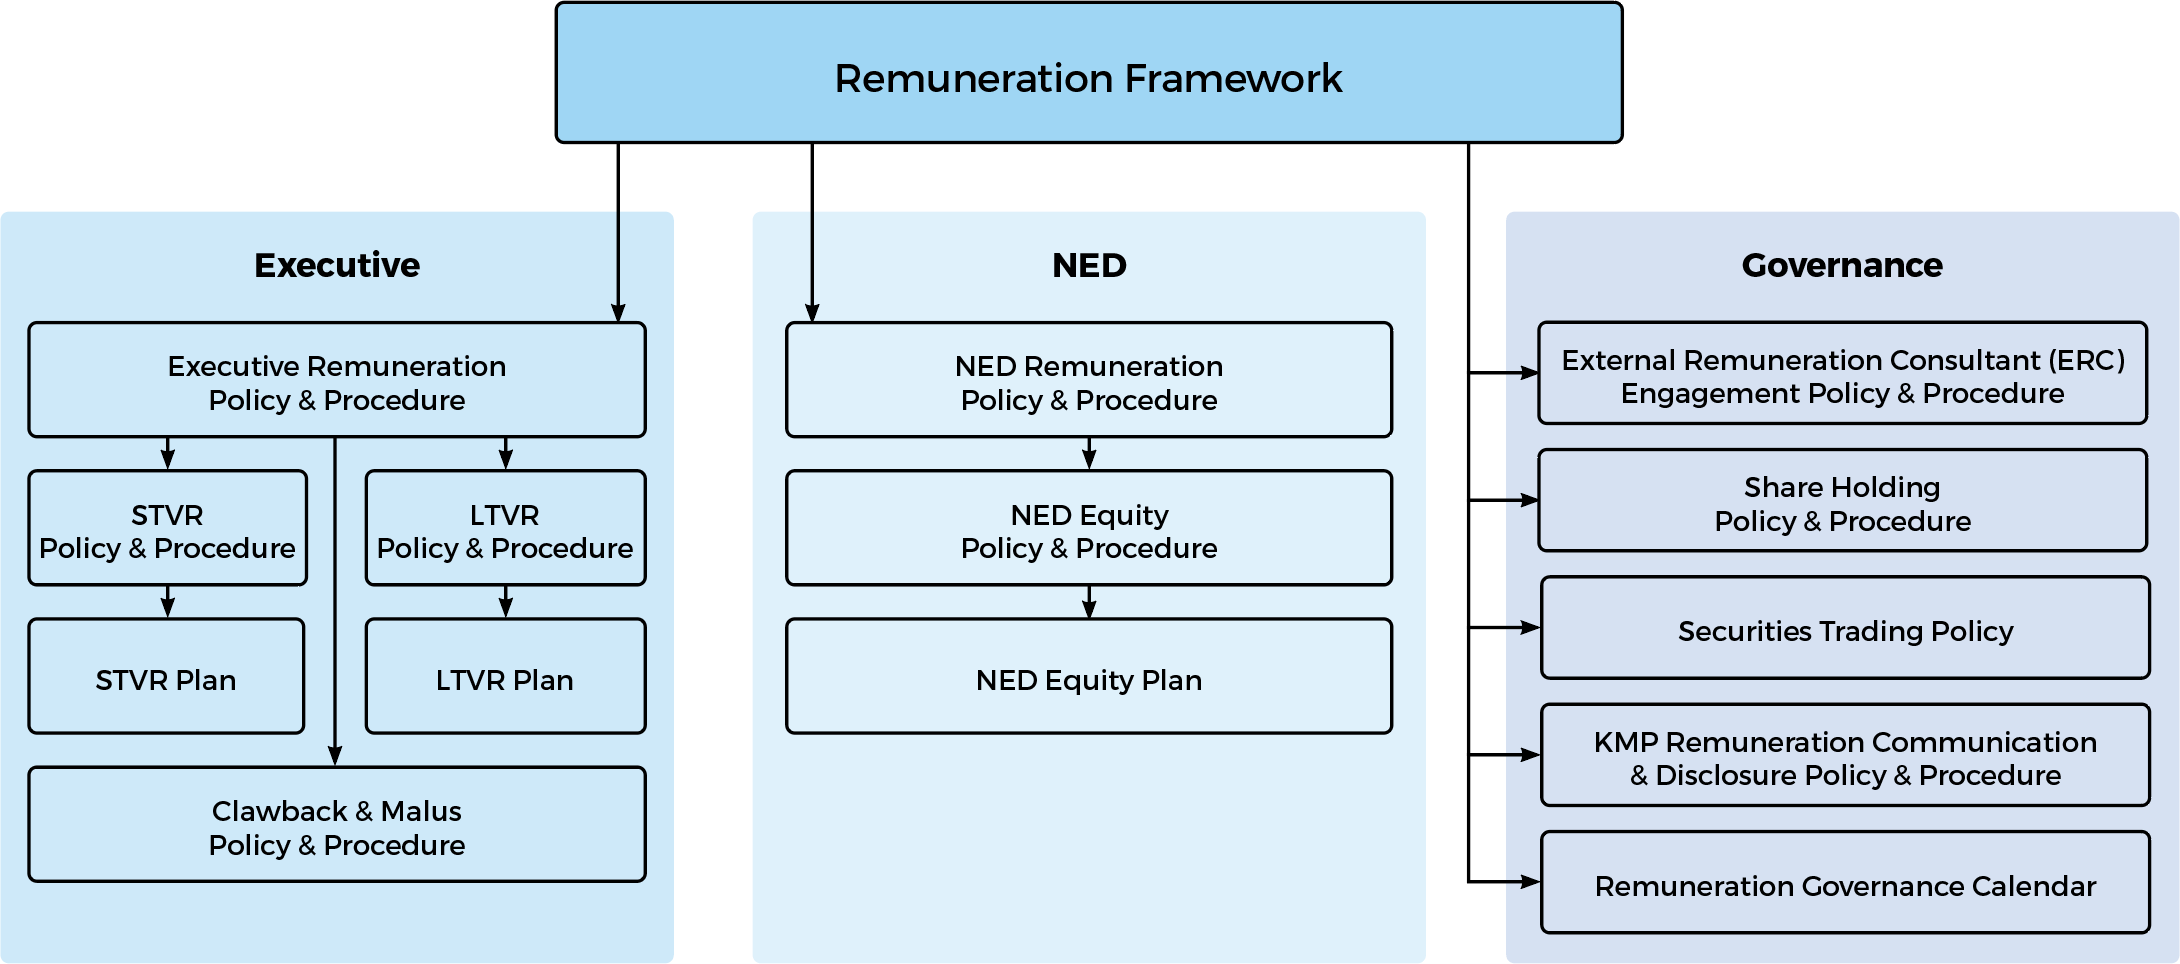 Components of an effective Remuneration Framework